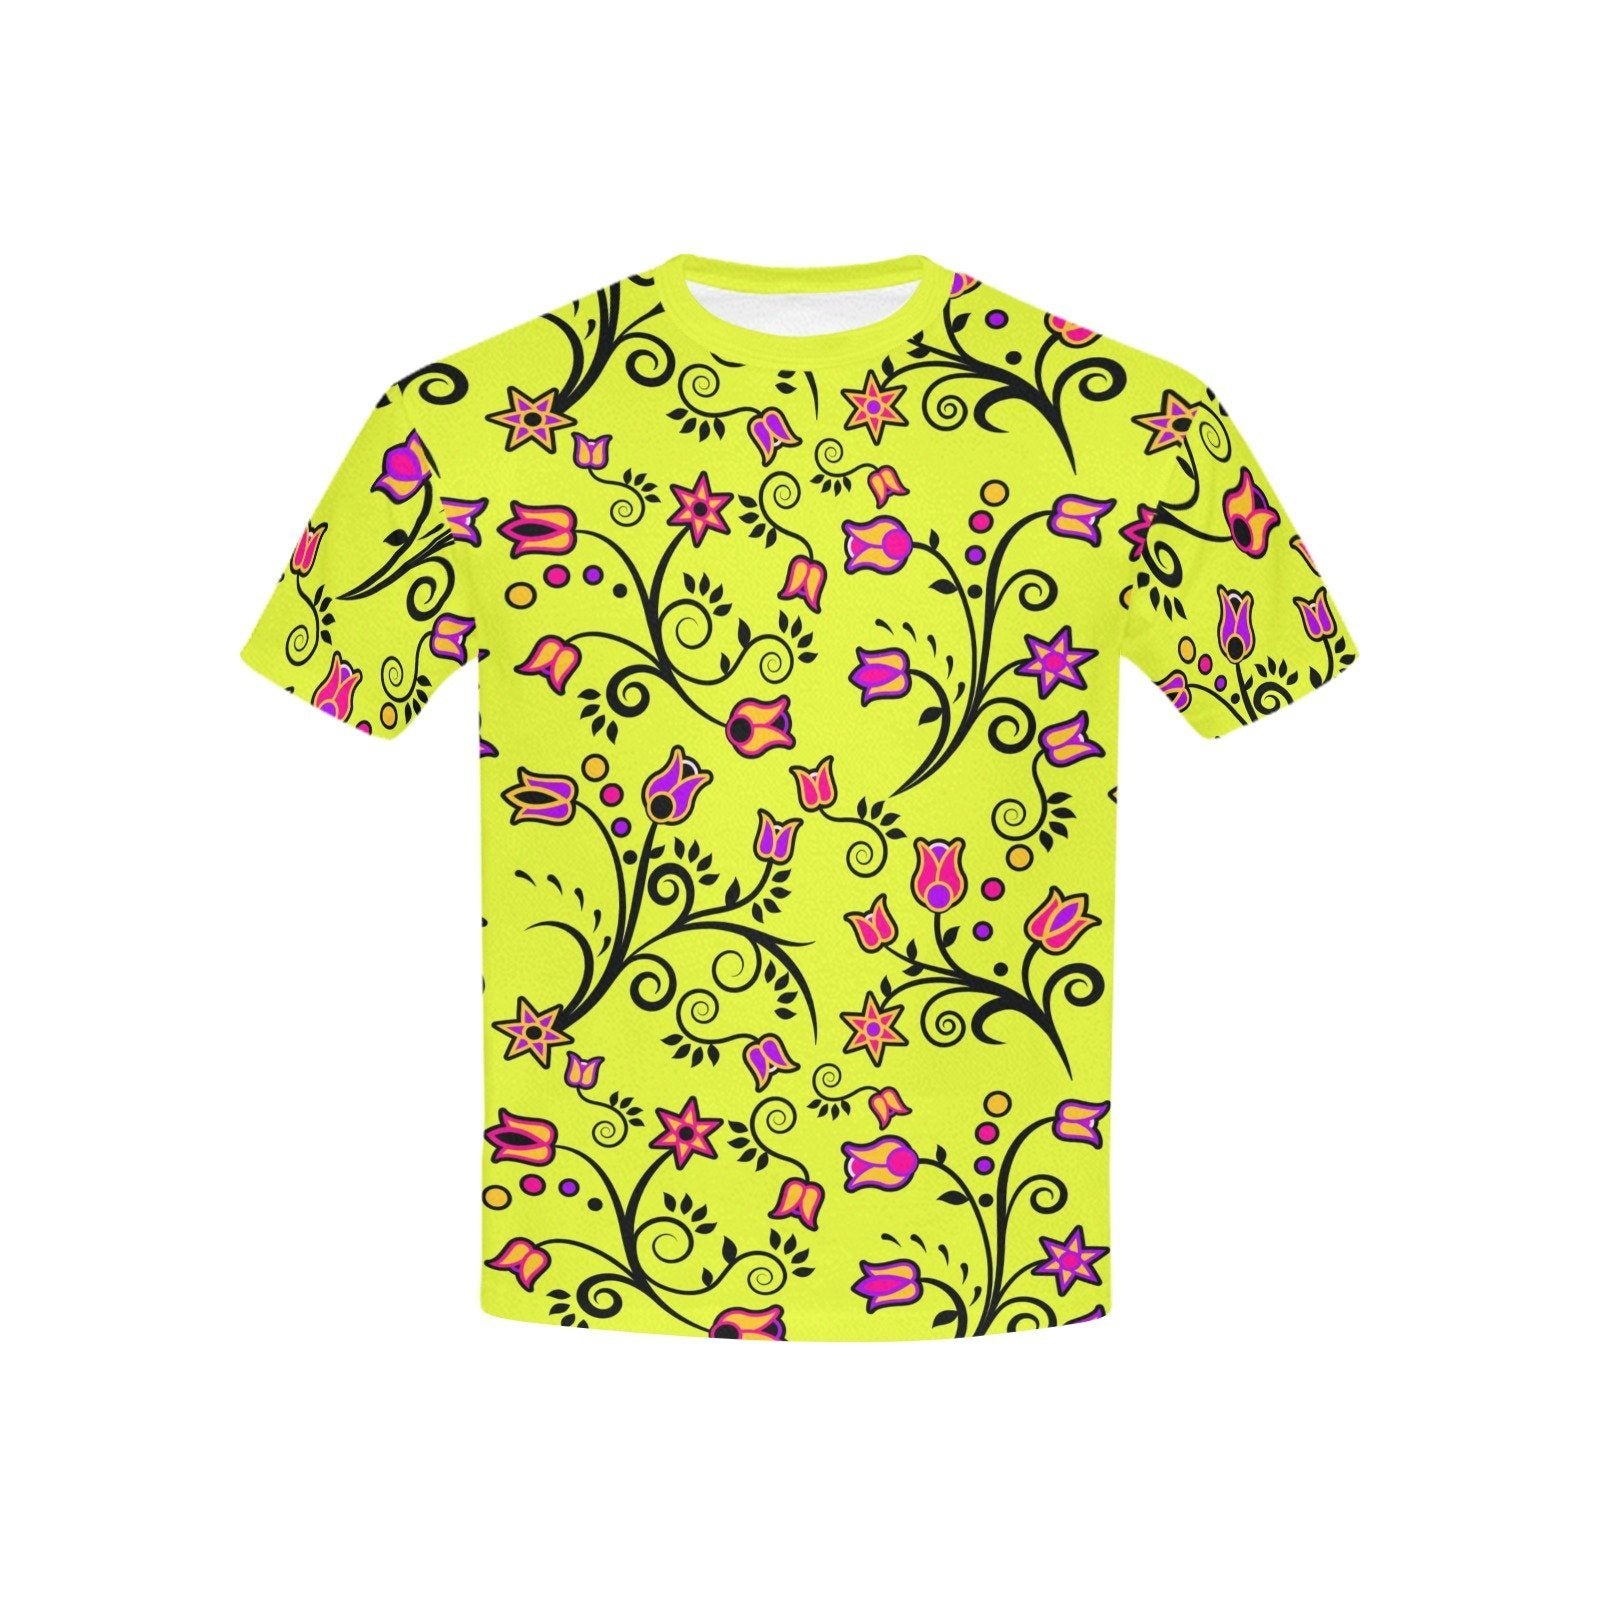 Key Lime Star Size) T-shirt (USA Kids